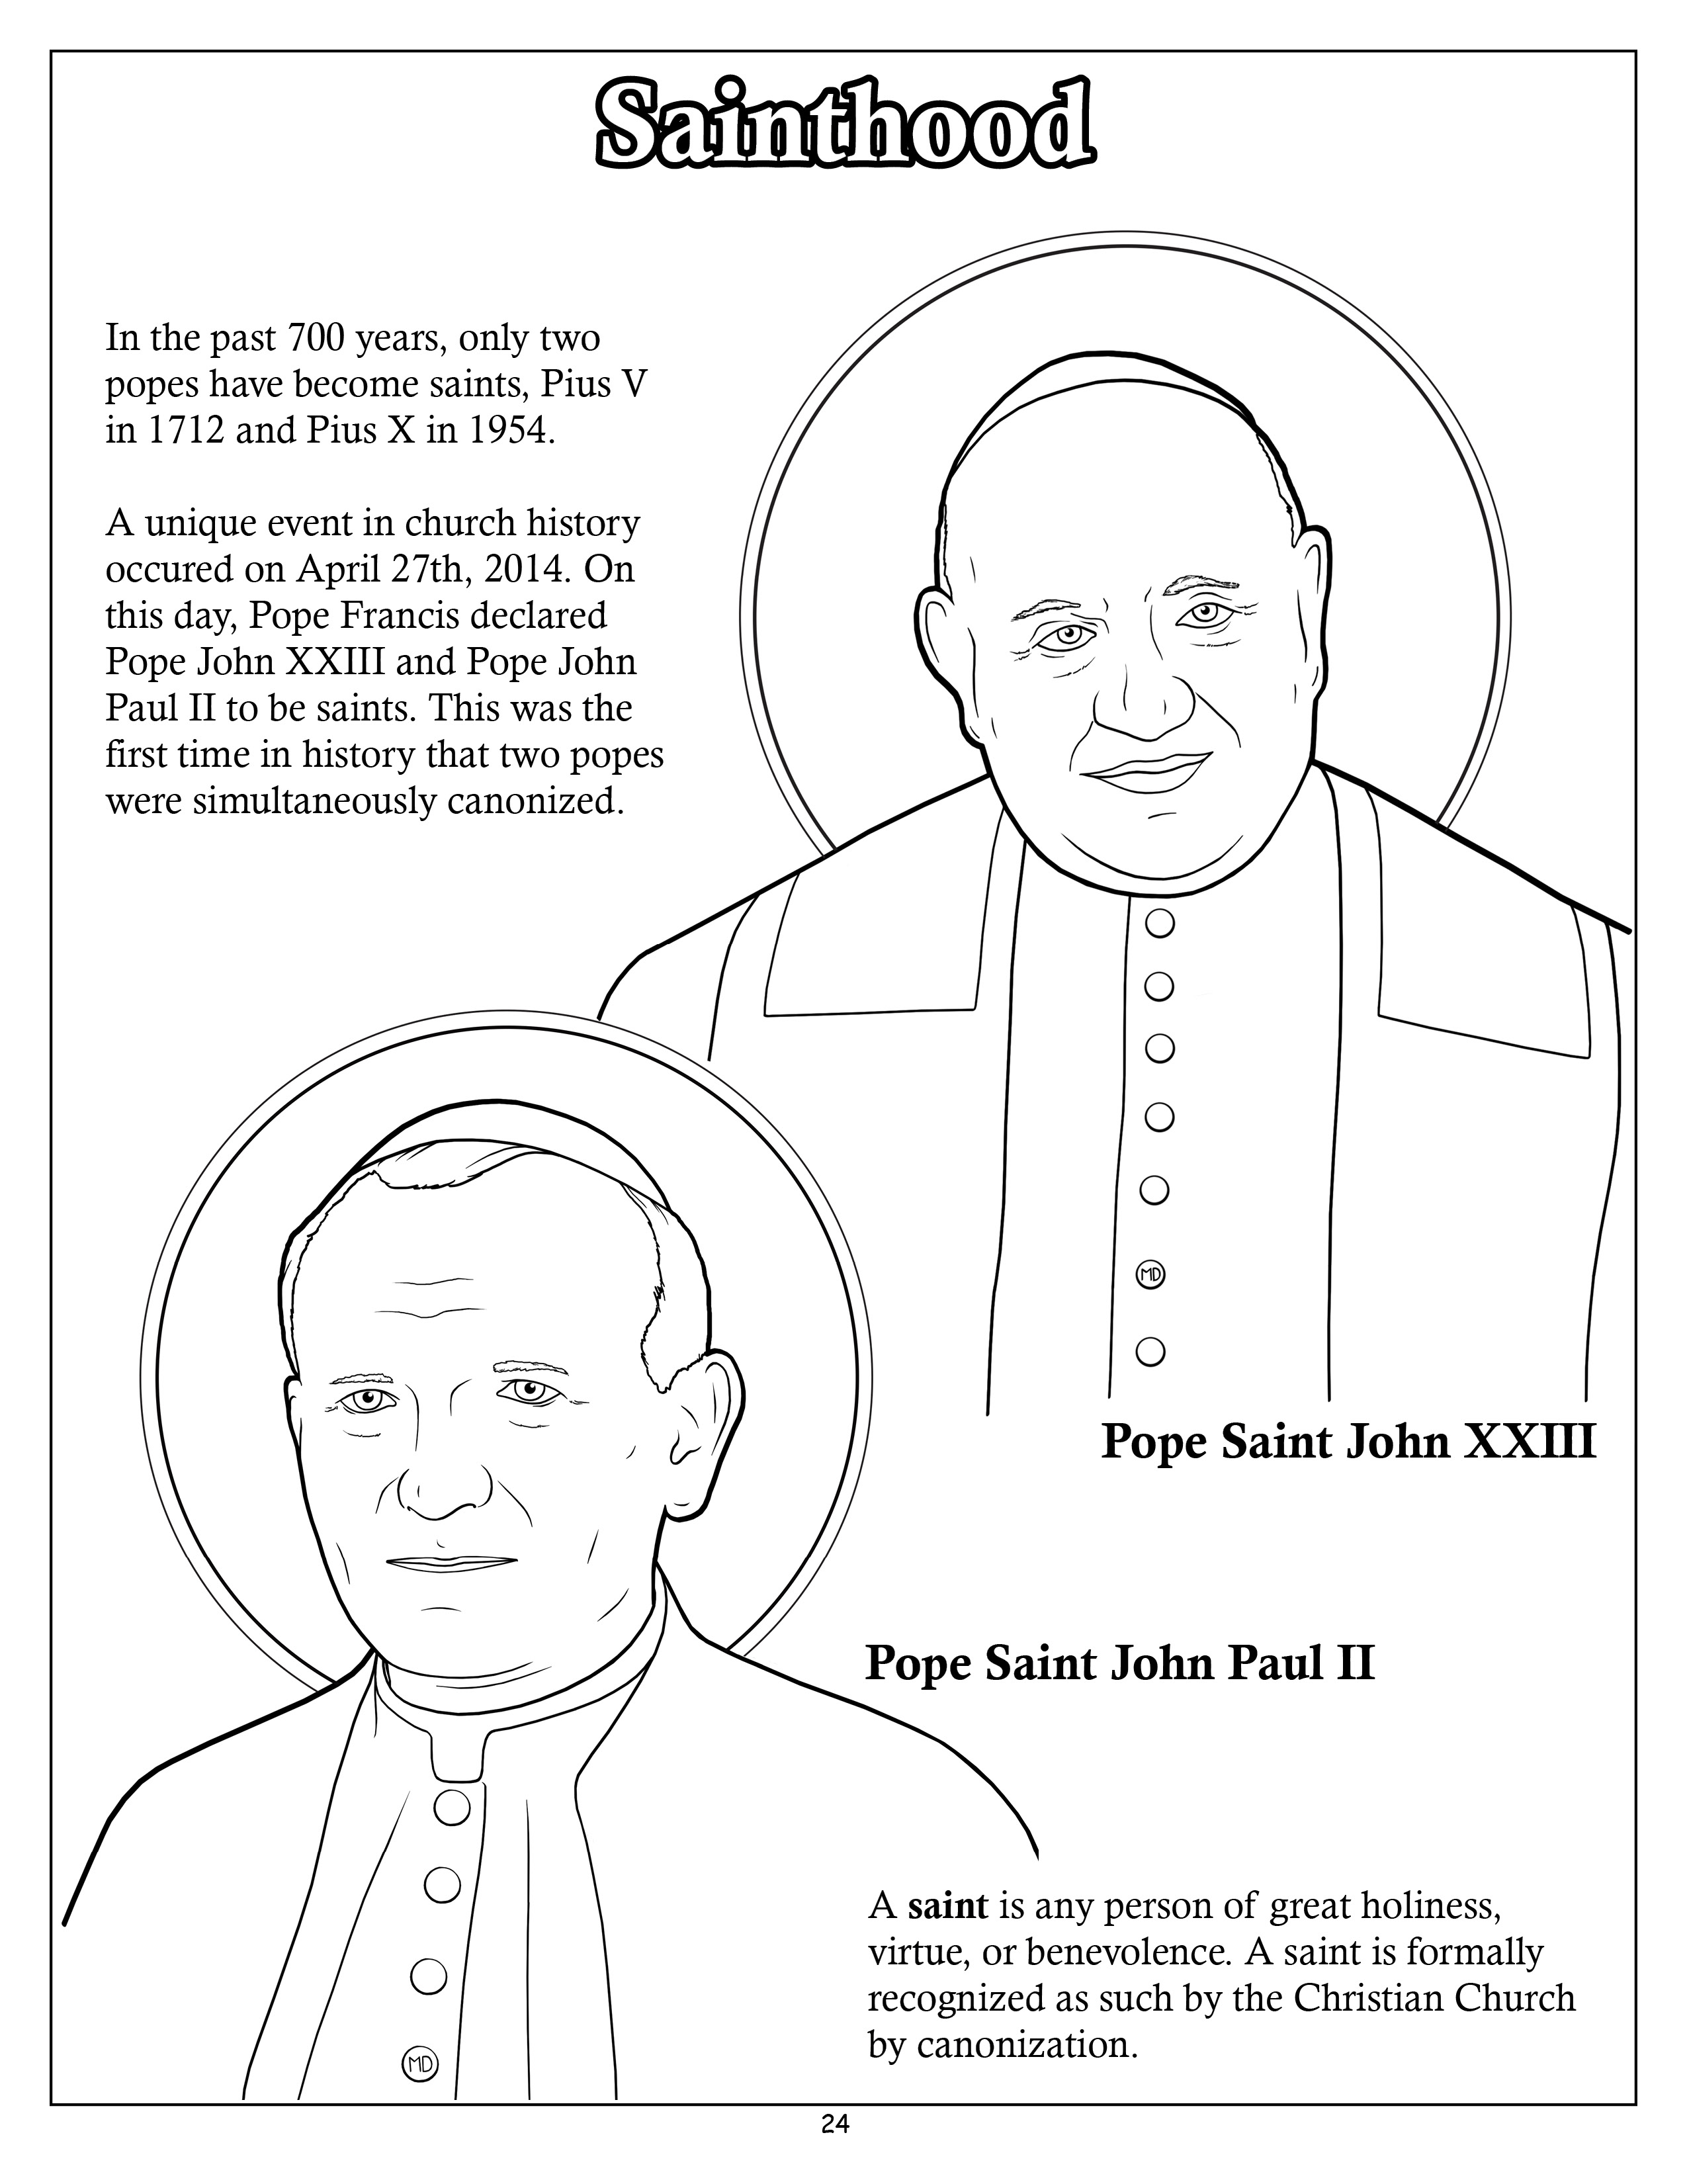 Two new Saints Pope John Paul II and John XXIII